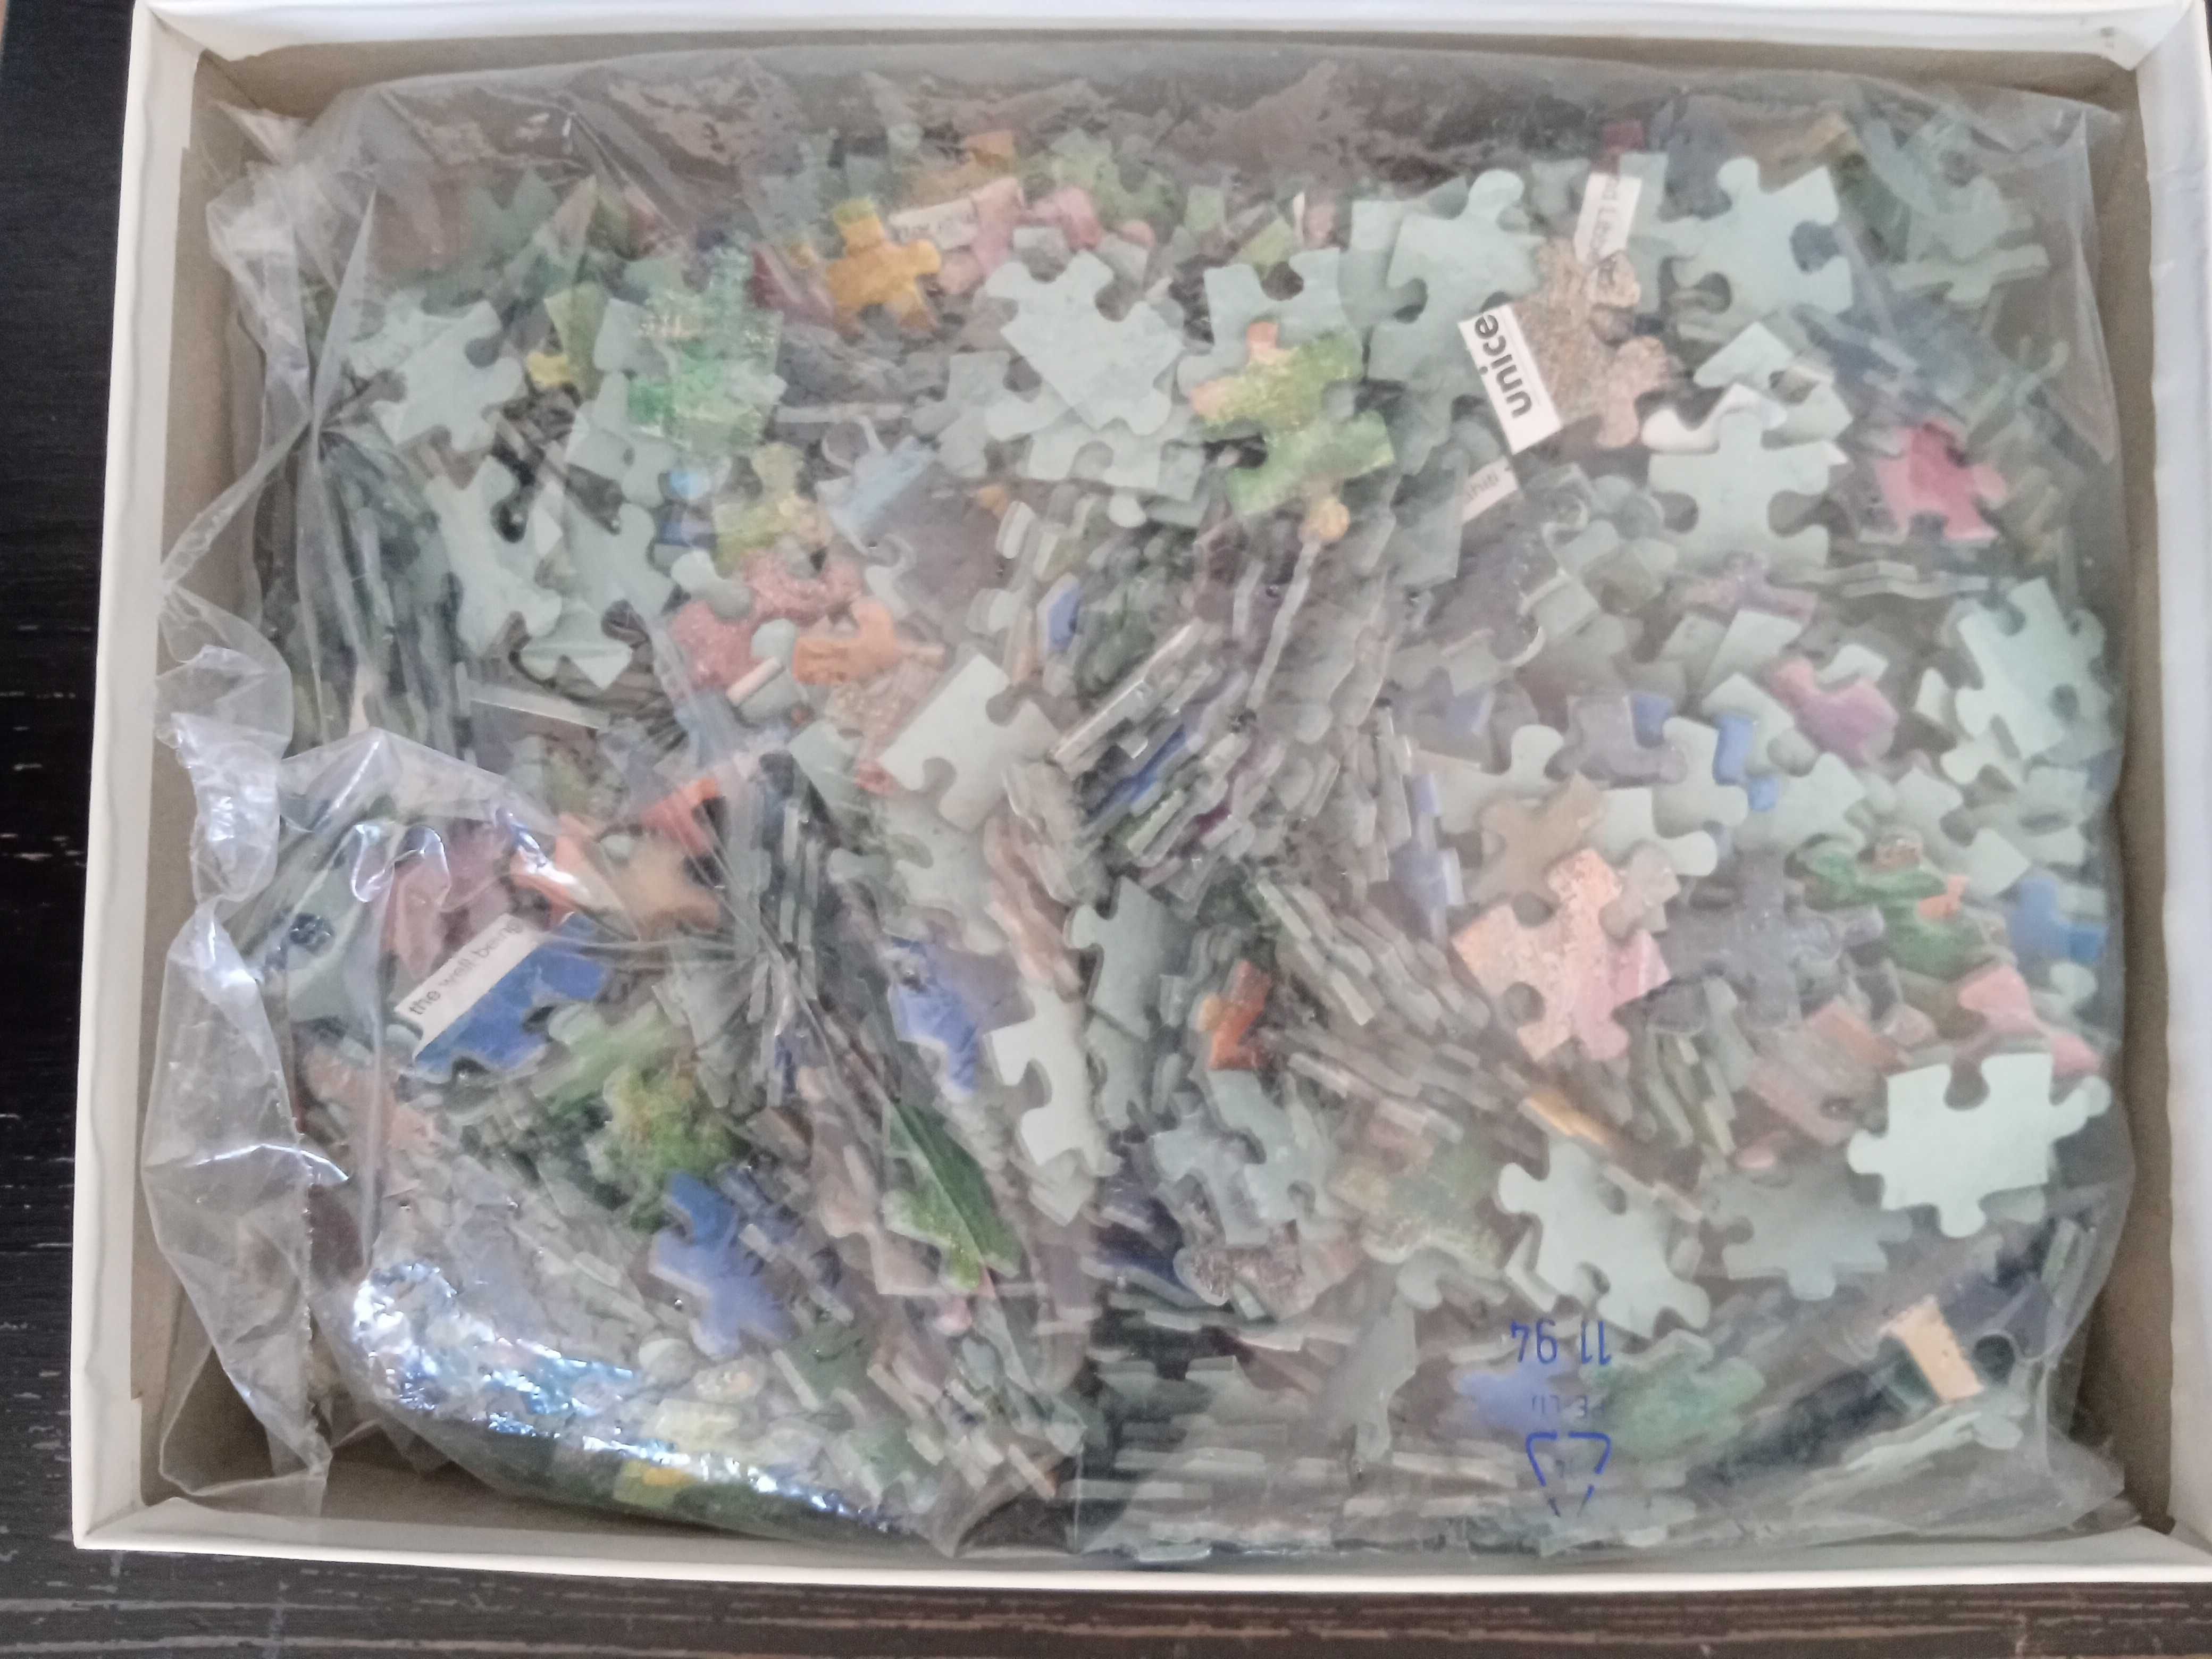 Puzzle UNICEF Rue de Tahiti 1000 peças